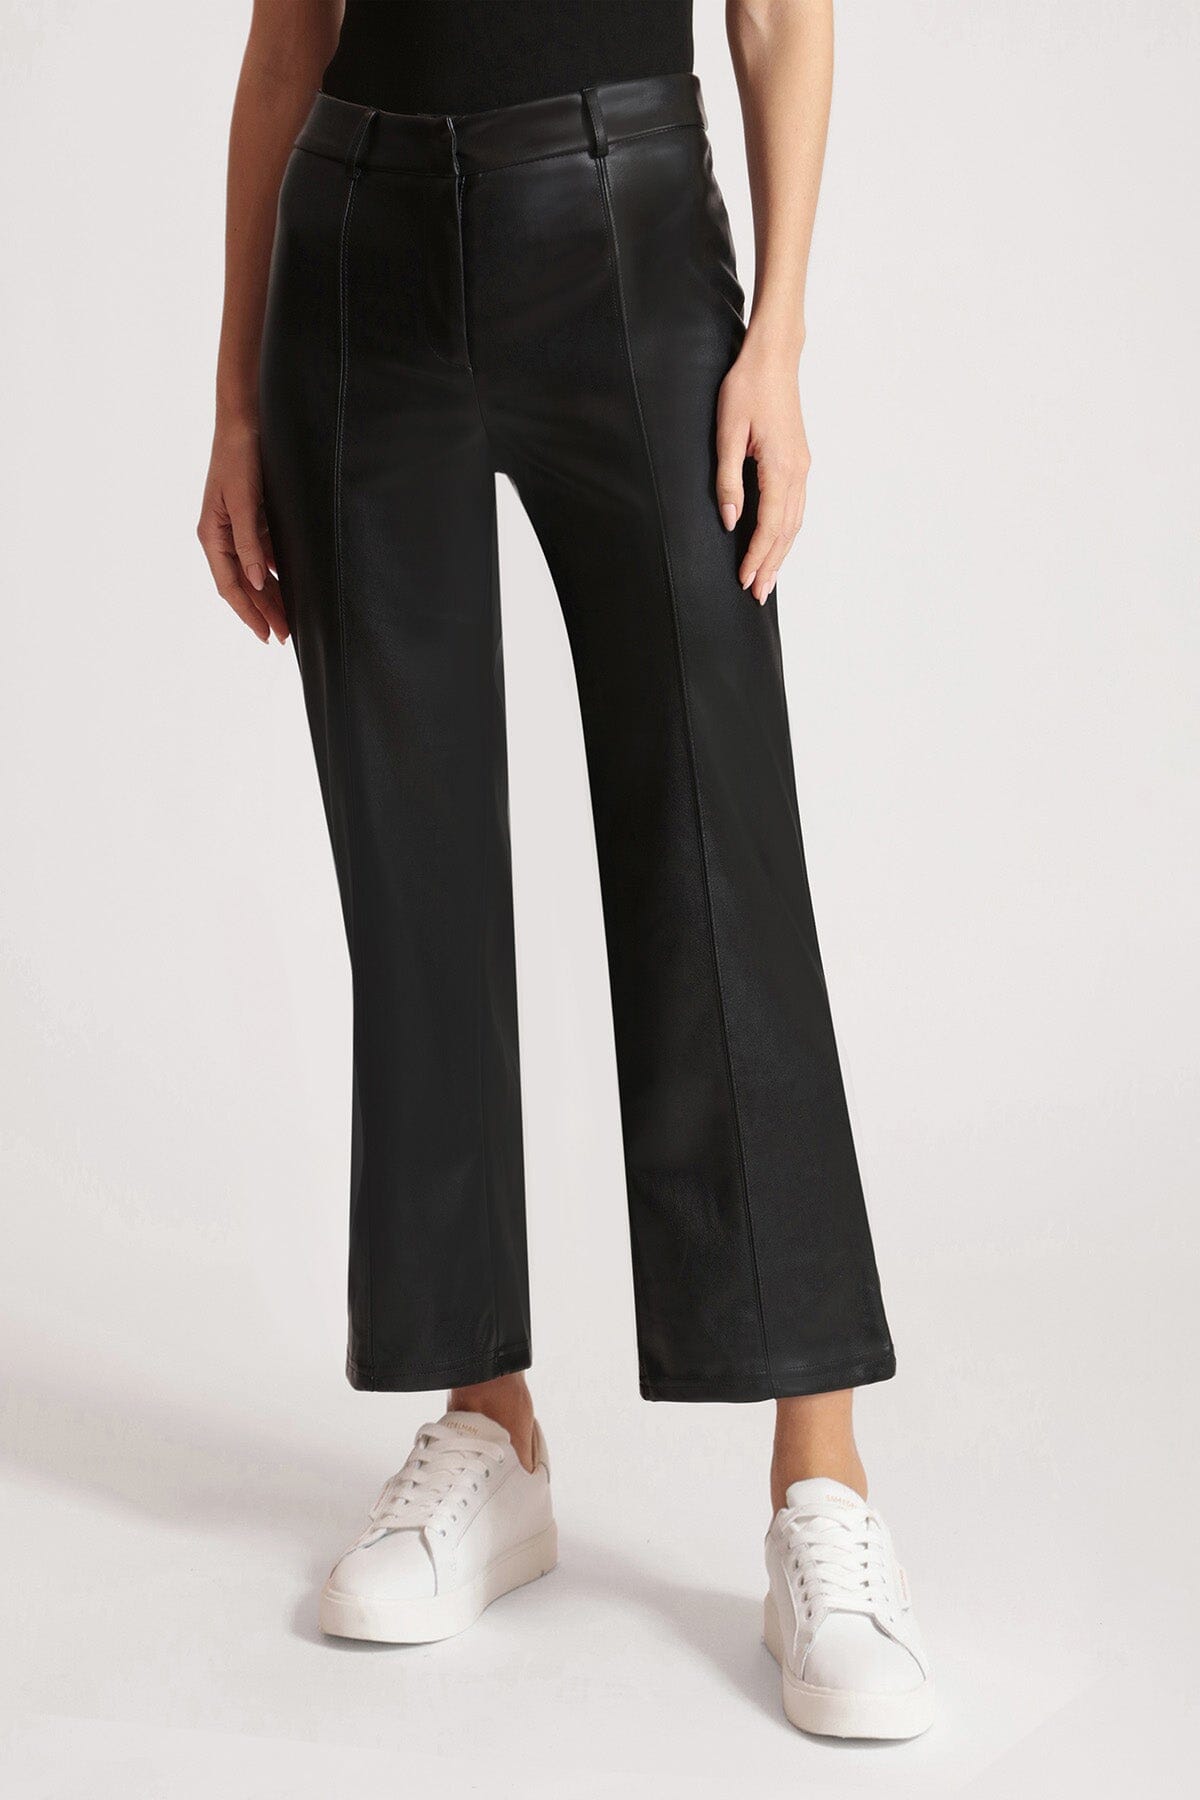 Women's black figure flattering faux ever leather wide leg cropped trouser pants for Fall fashion by Avec Les Filles